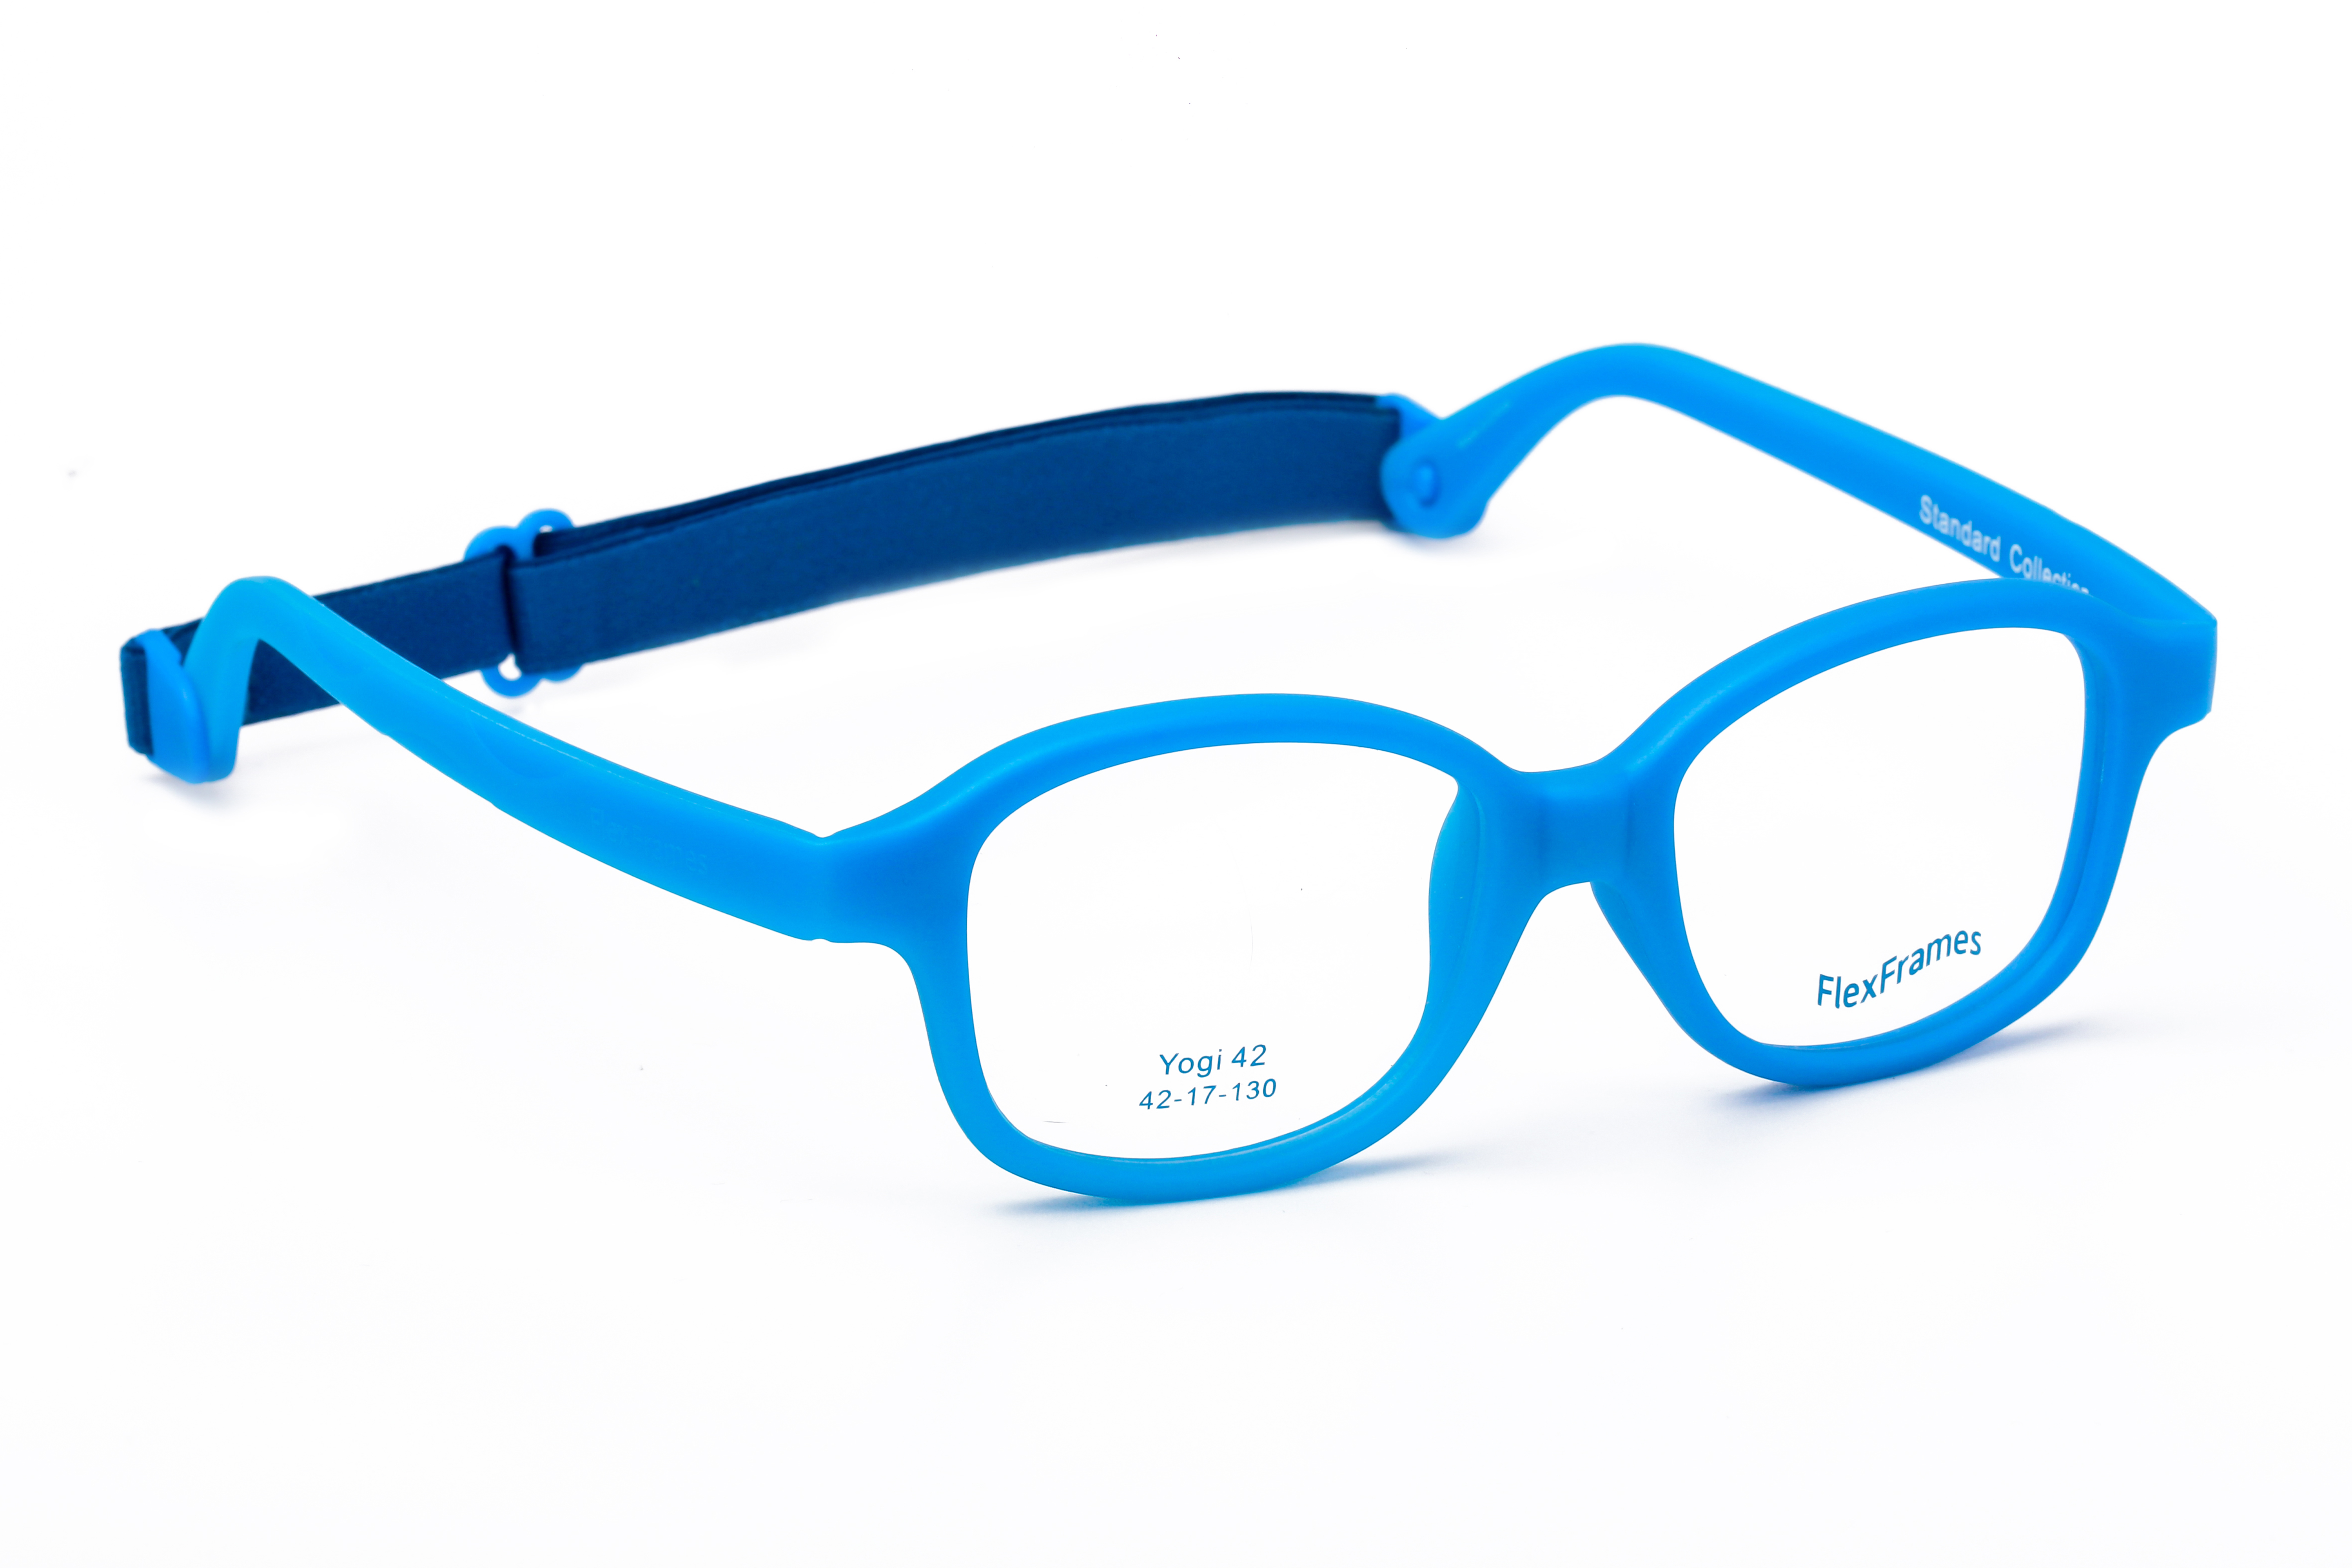 Picture of FlexFrames Eyeglasses Yogi 42